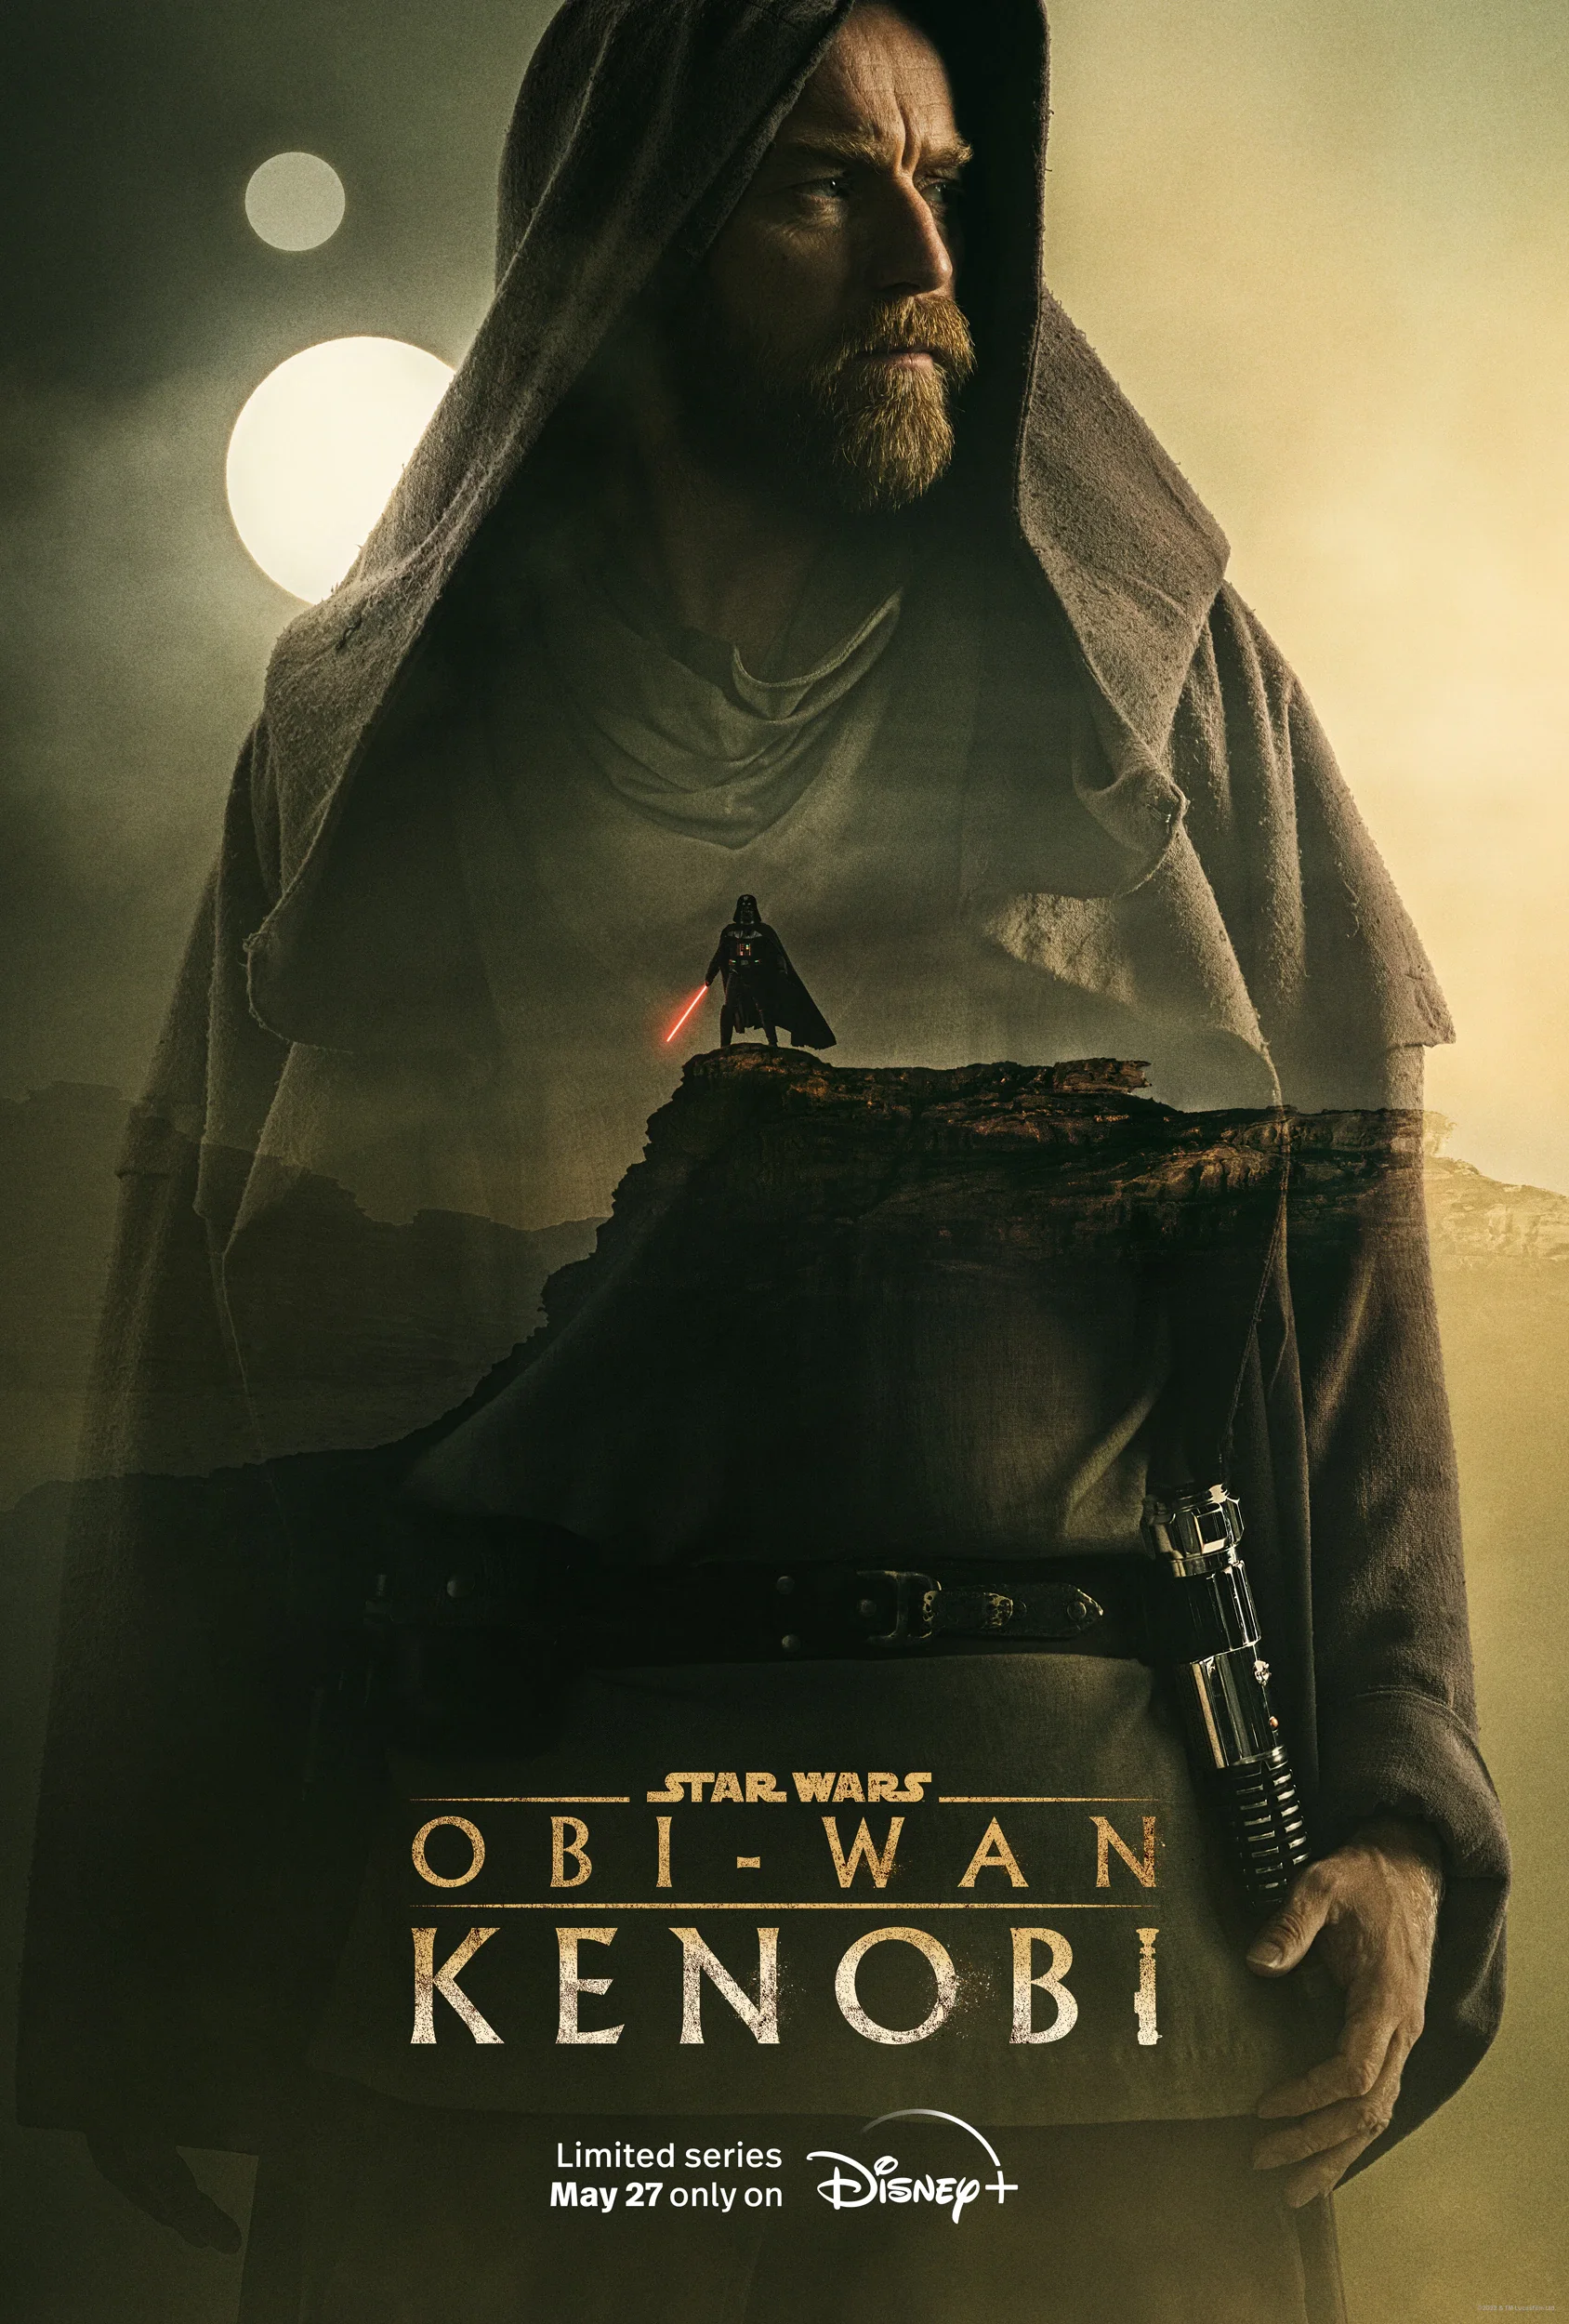 Poster for Obi-Wan Kenobi television series featuring a hooded Obi-Wan Kenobi